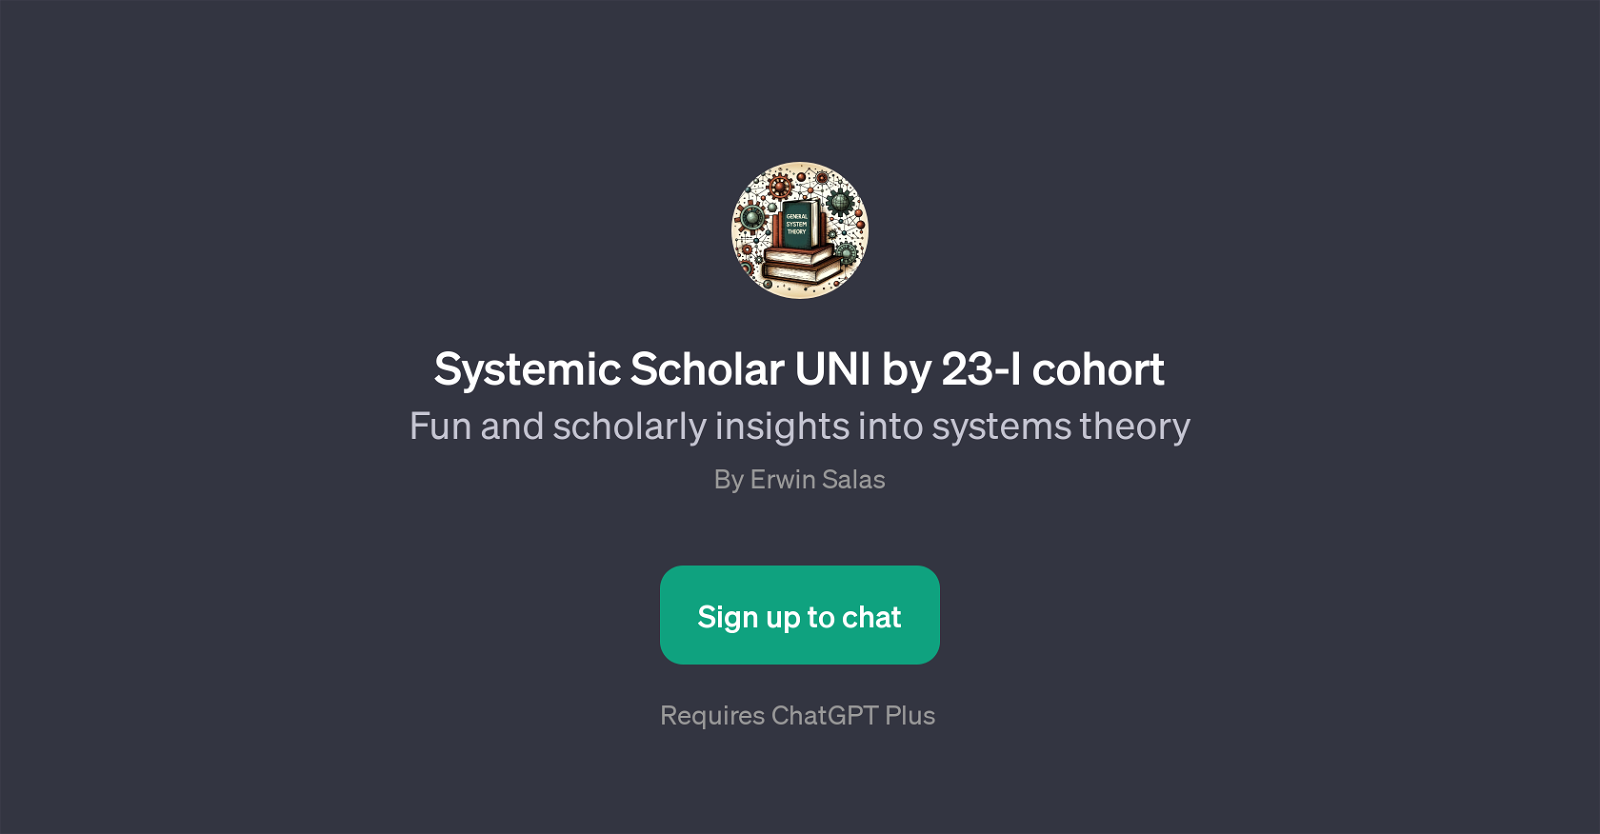 Systemic Scholar UNI by 23-I cohort website